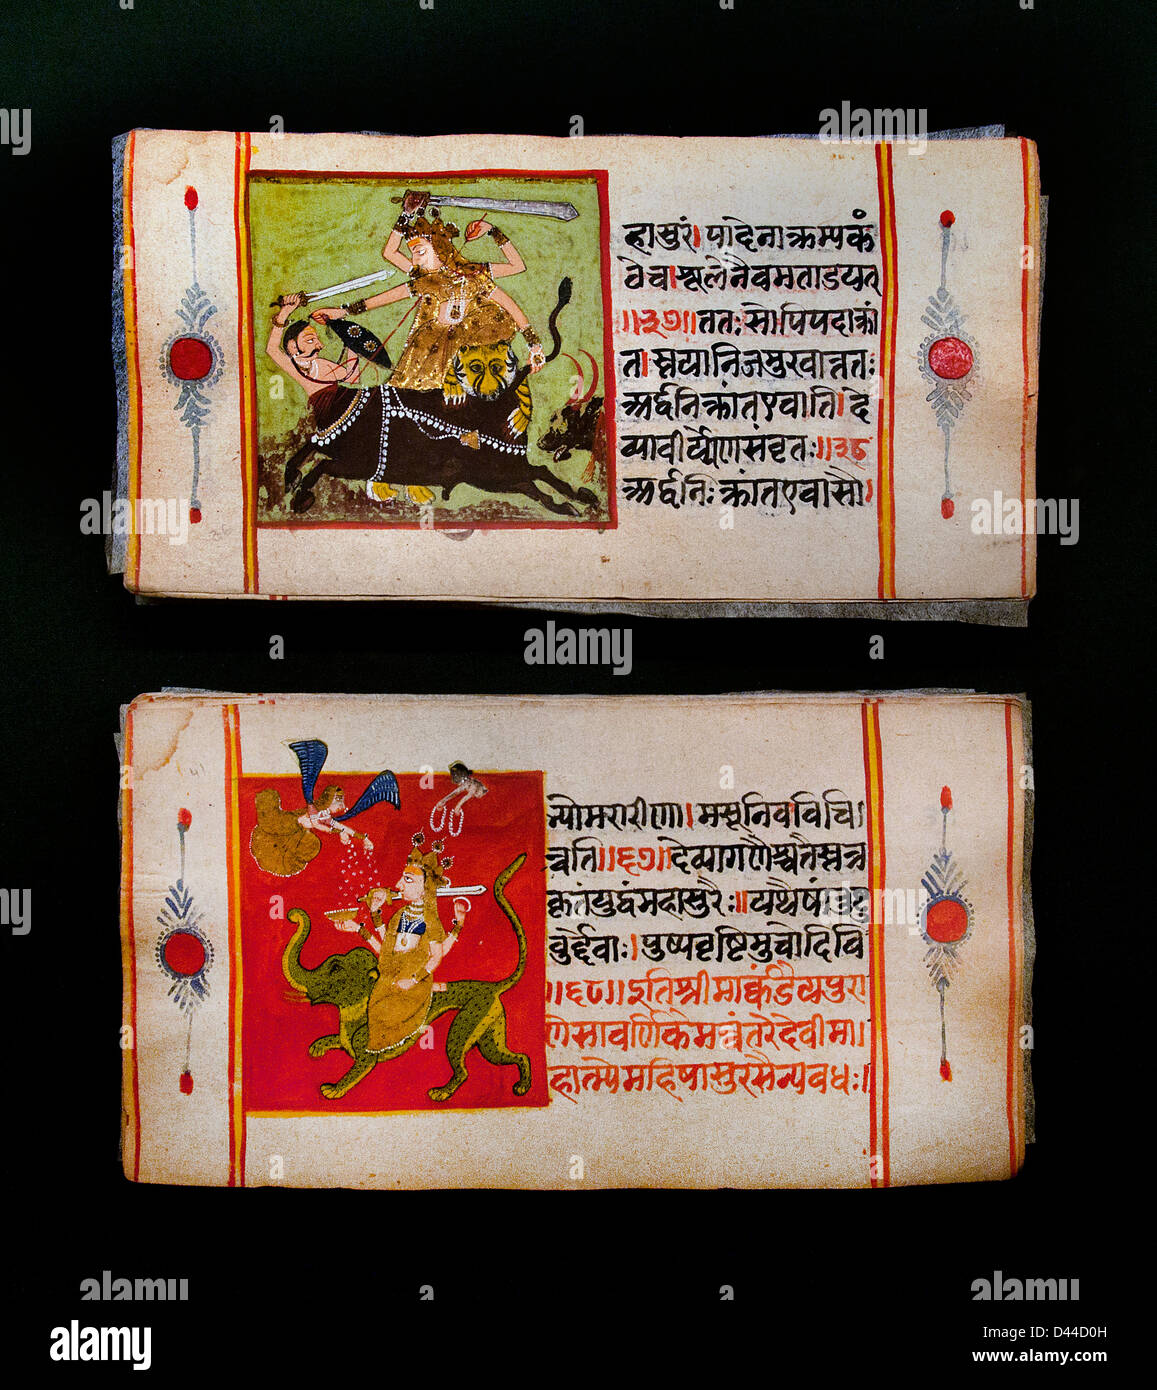 Devi Mahatmyam Mahatmya victoria texto religioso hindú de la diosa Durga demonio Mahishasura 1765-1708 Samvat Rajasthani Rajastán India Foto de stock